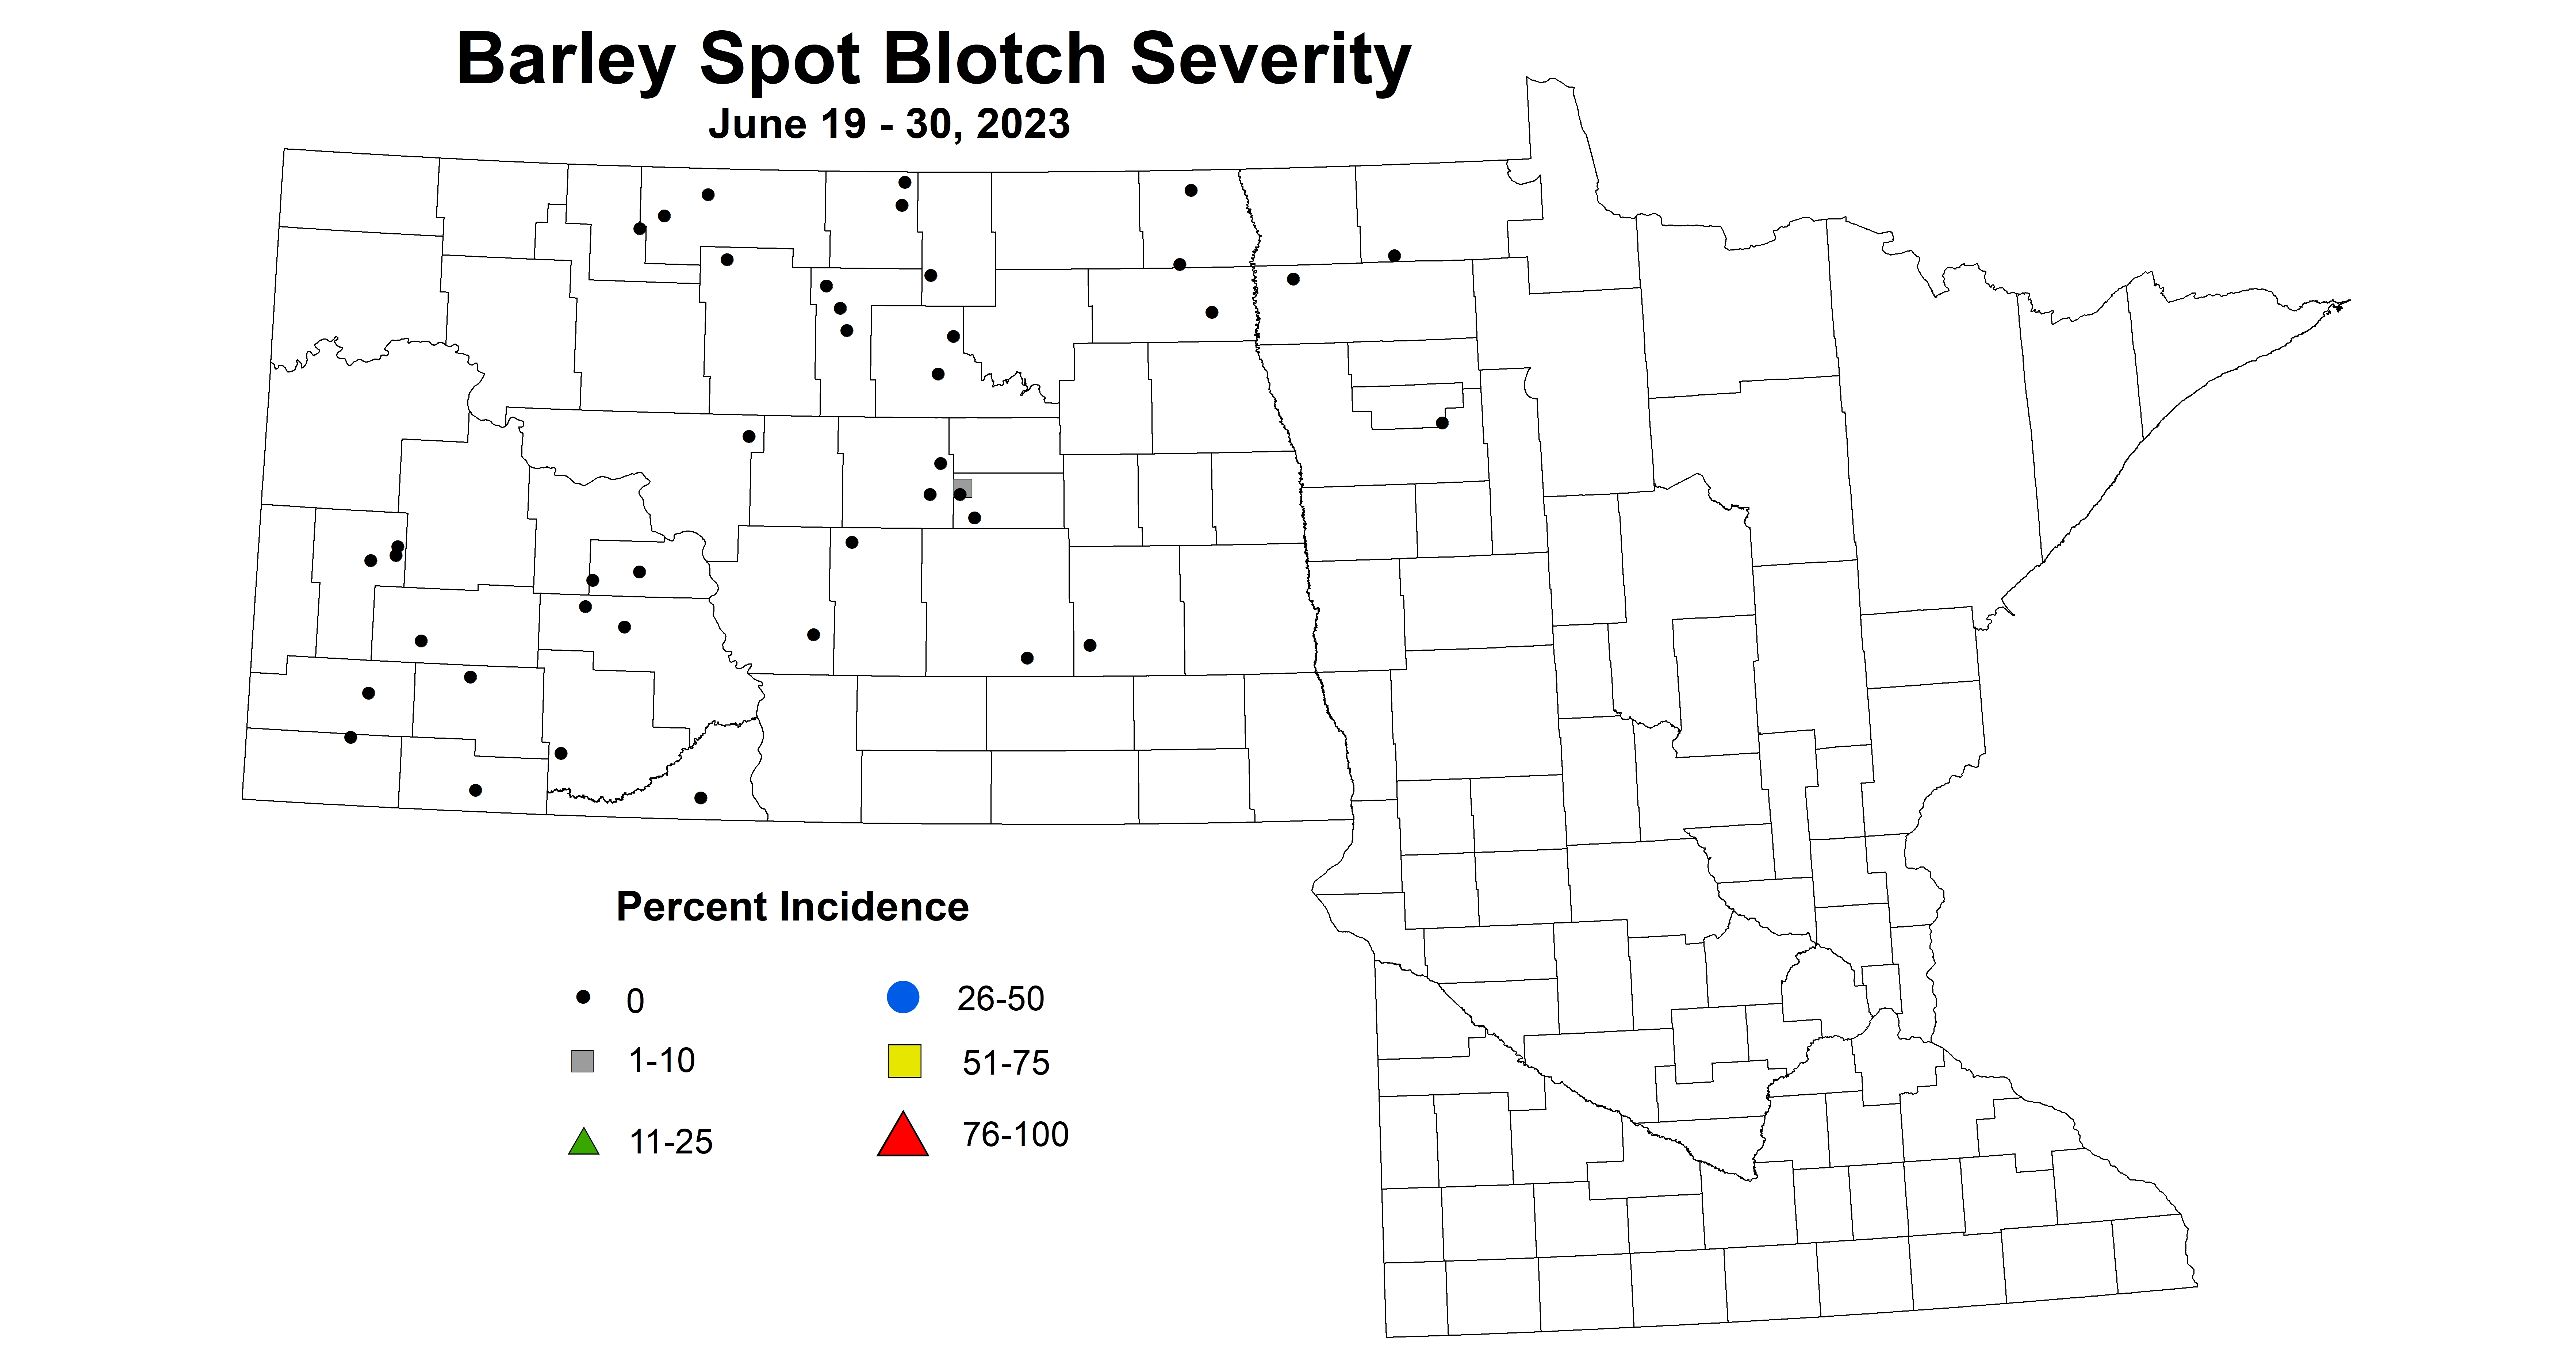 barley spot blotch severity June 19-30 2023